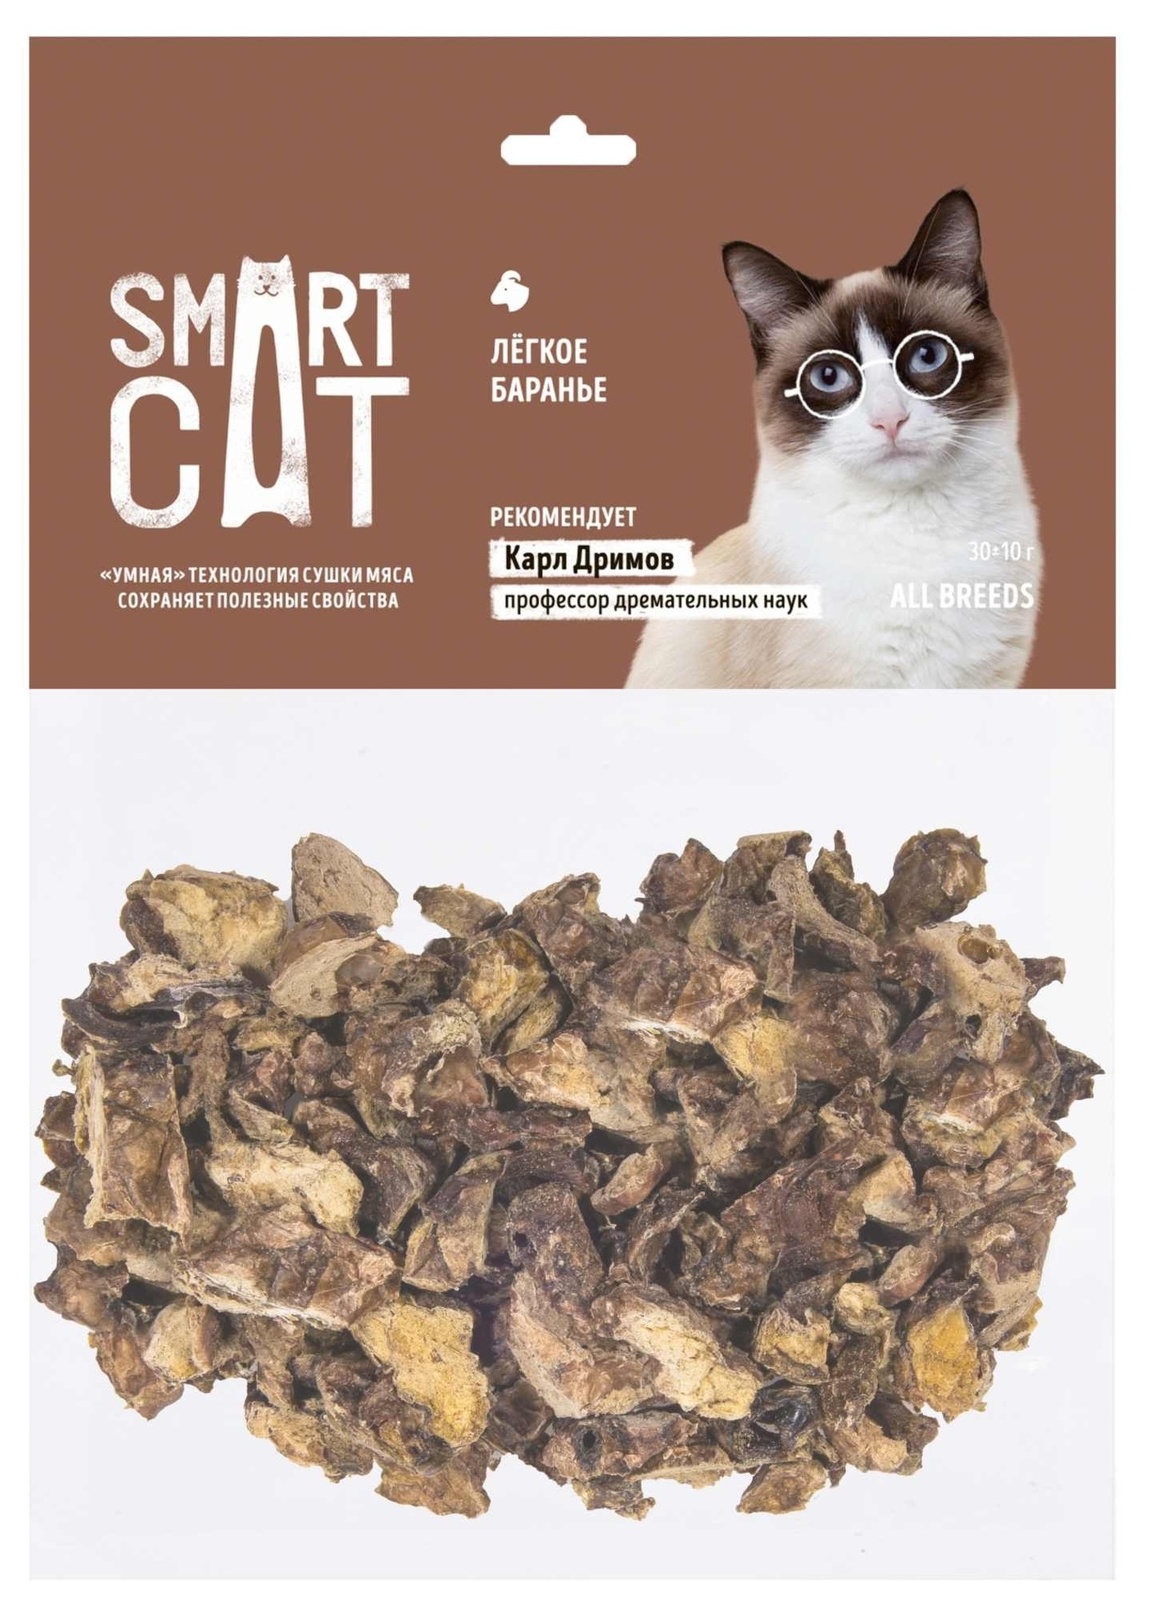 Smart Cat лакомства Smart Cat лакомства легкое баранье (30 г) smart cat лакомства smart cat лакомства подушечки из мяса кролика 30 г